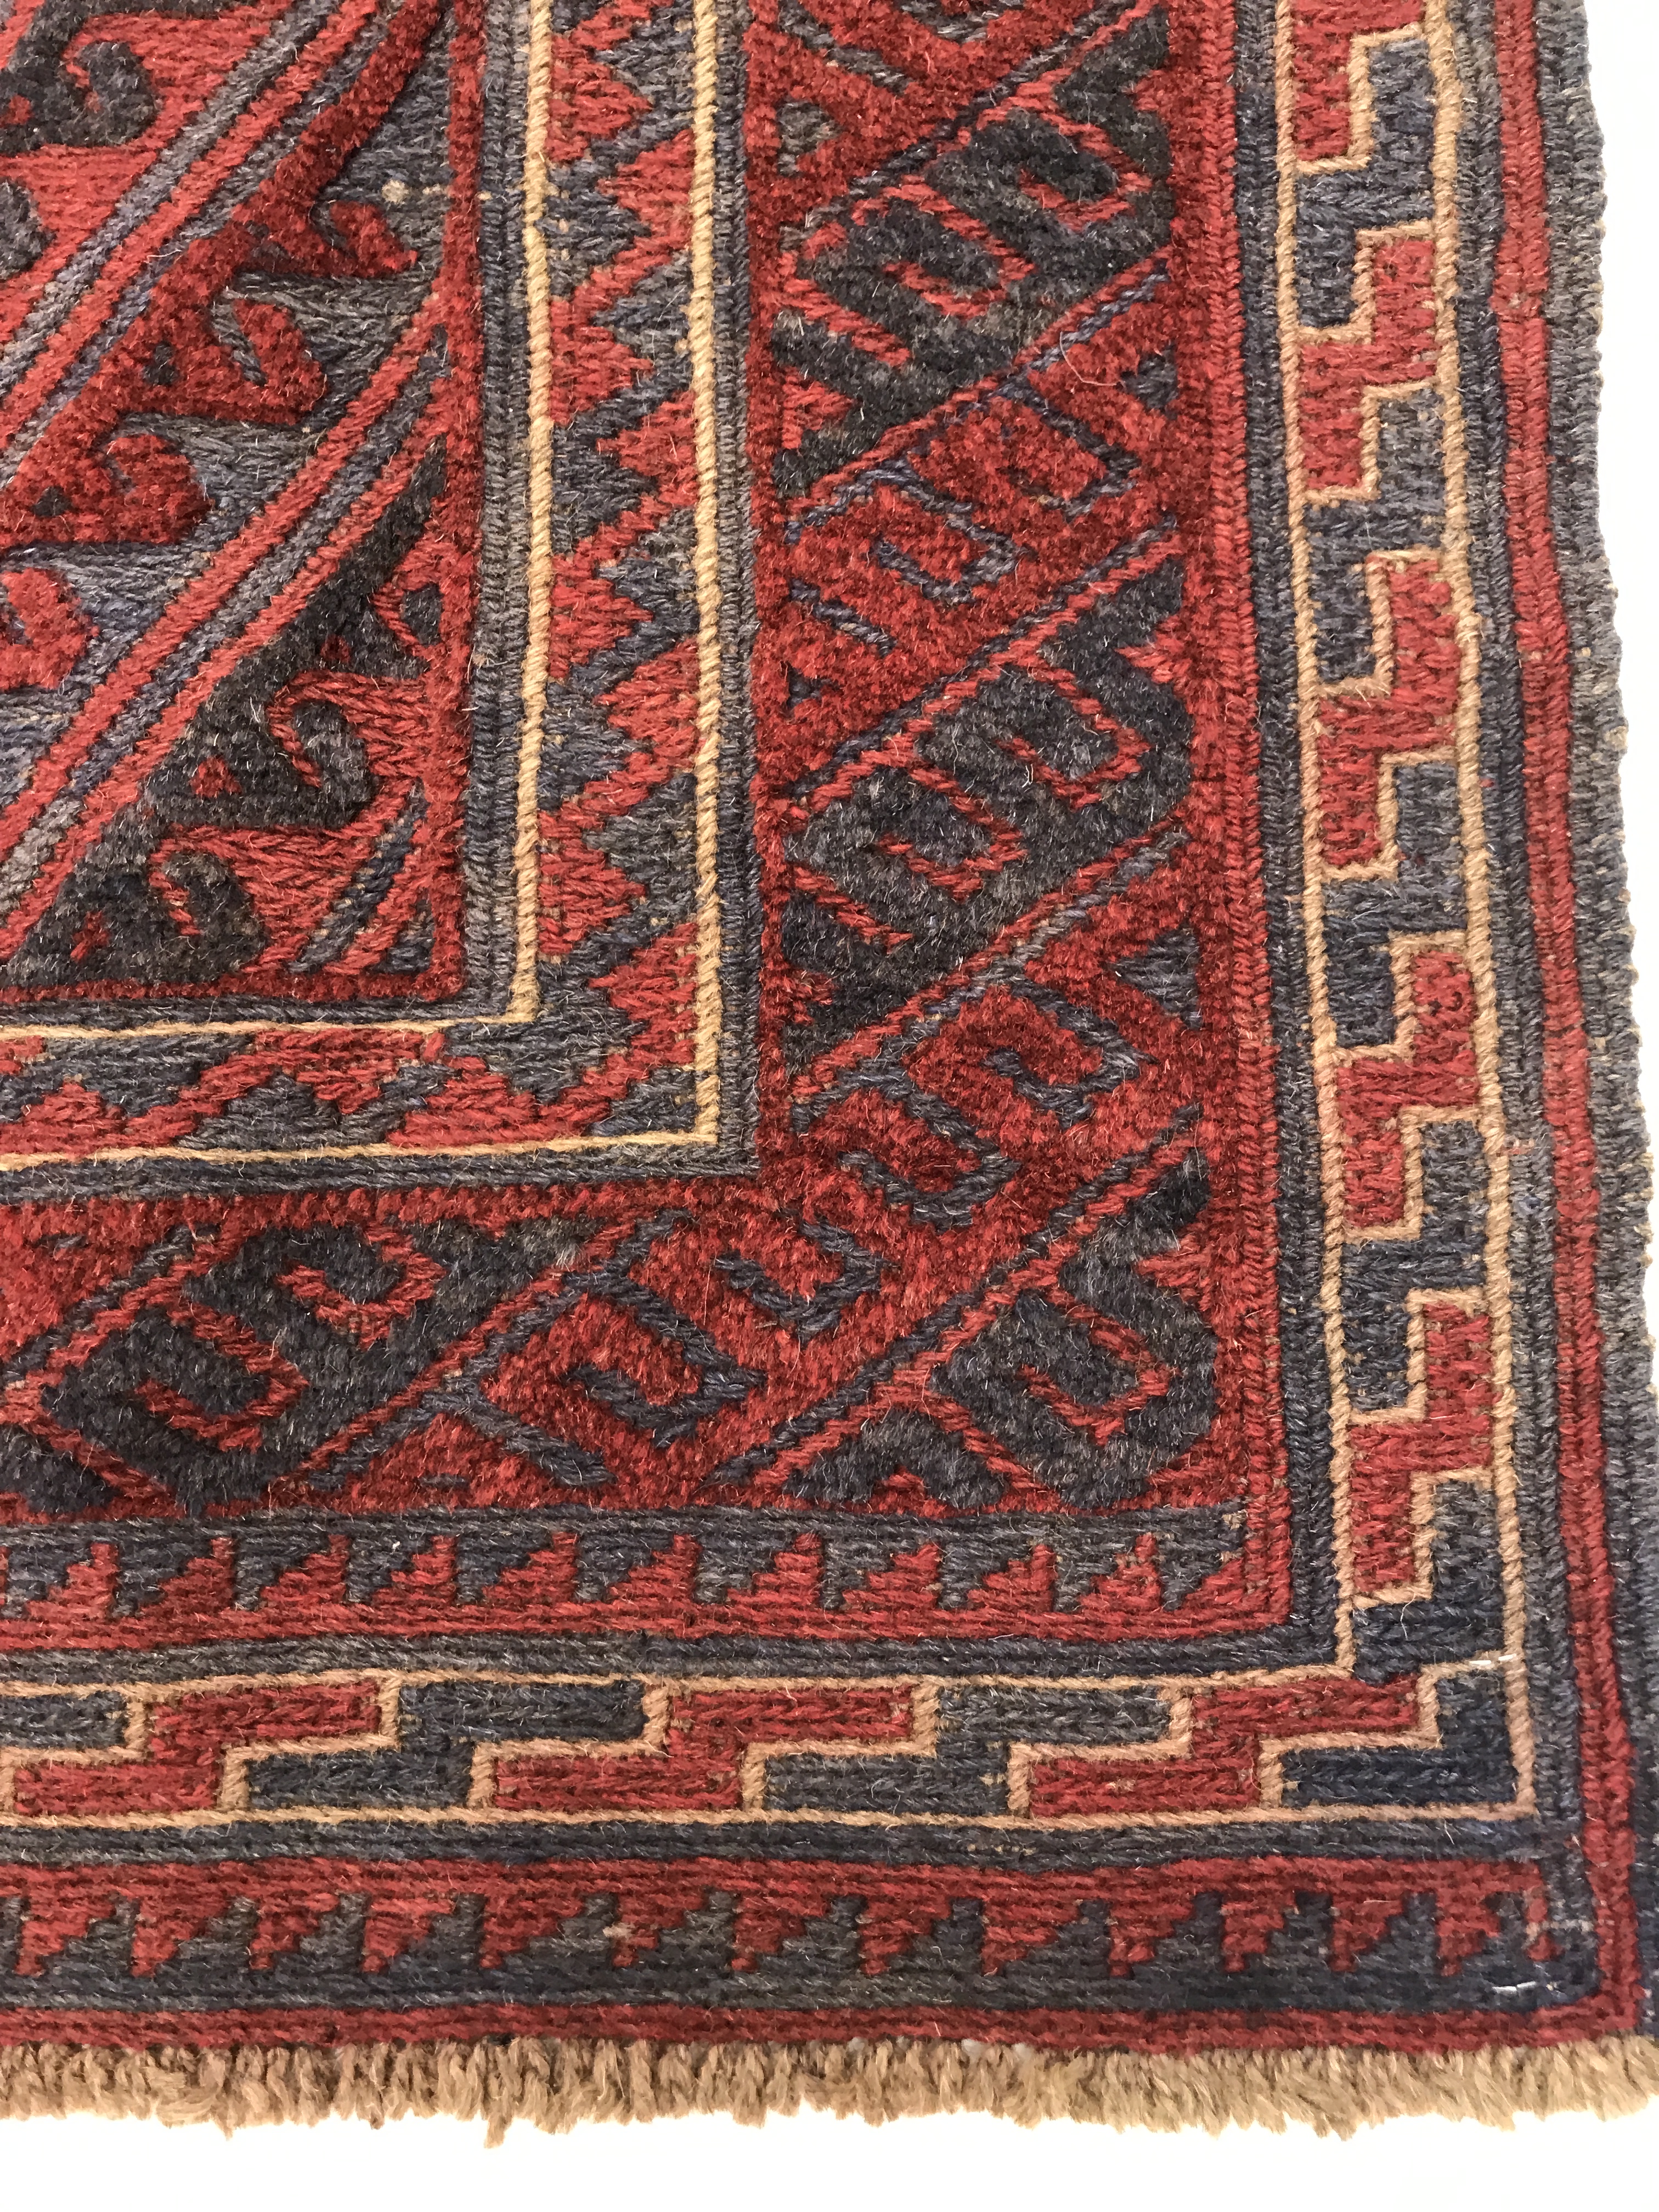 Gazak red and blue ground rug, central medallion, 120cm x 114cm - Image 5 of 6